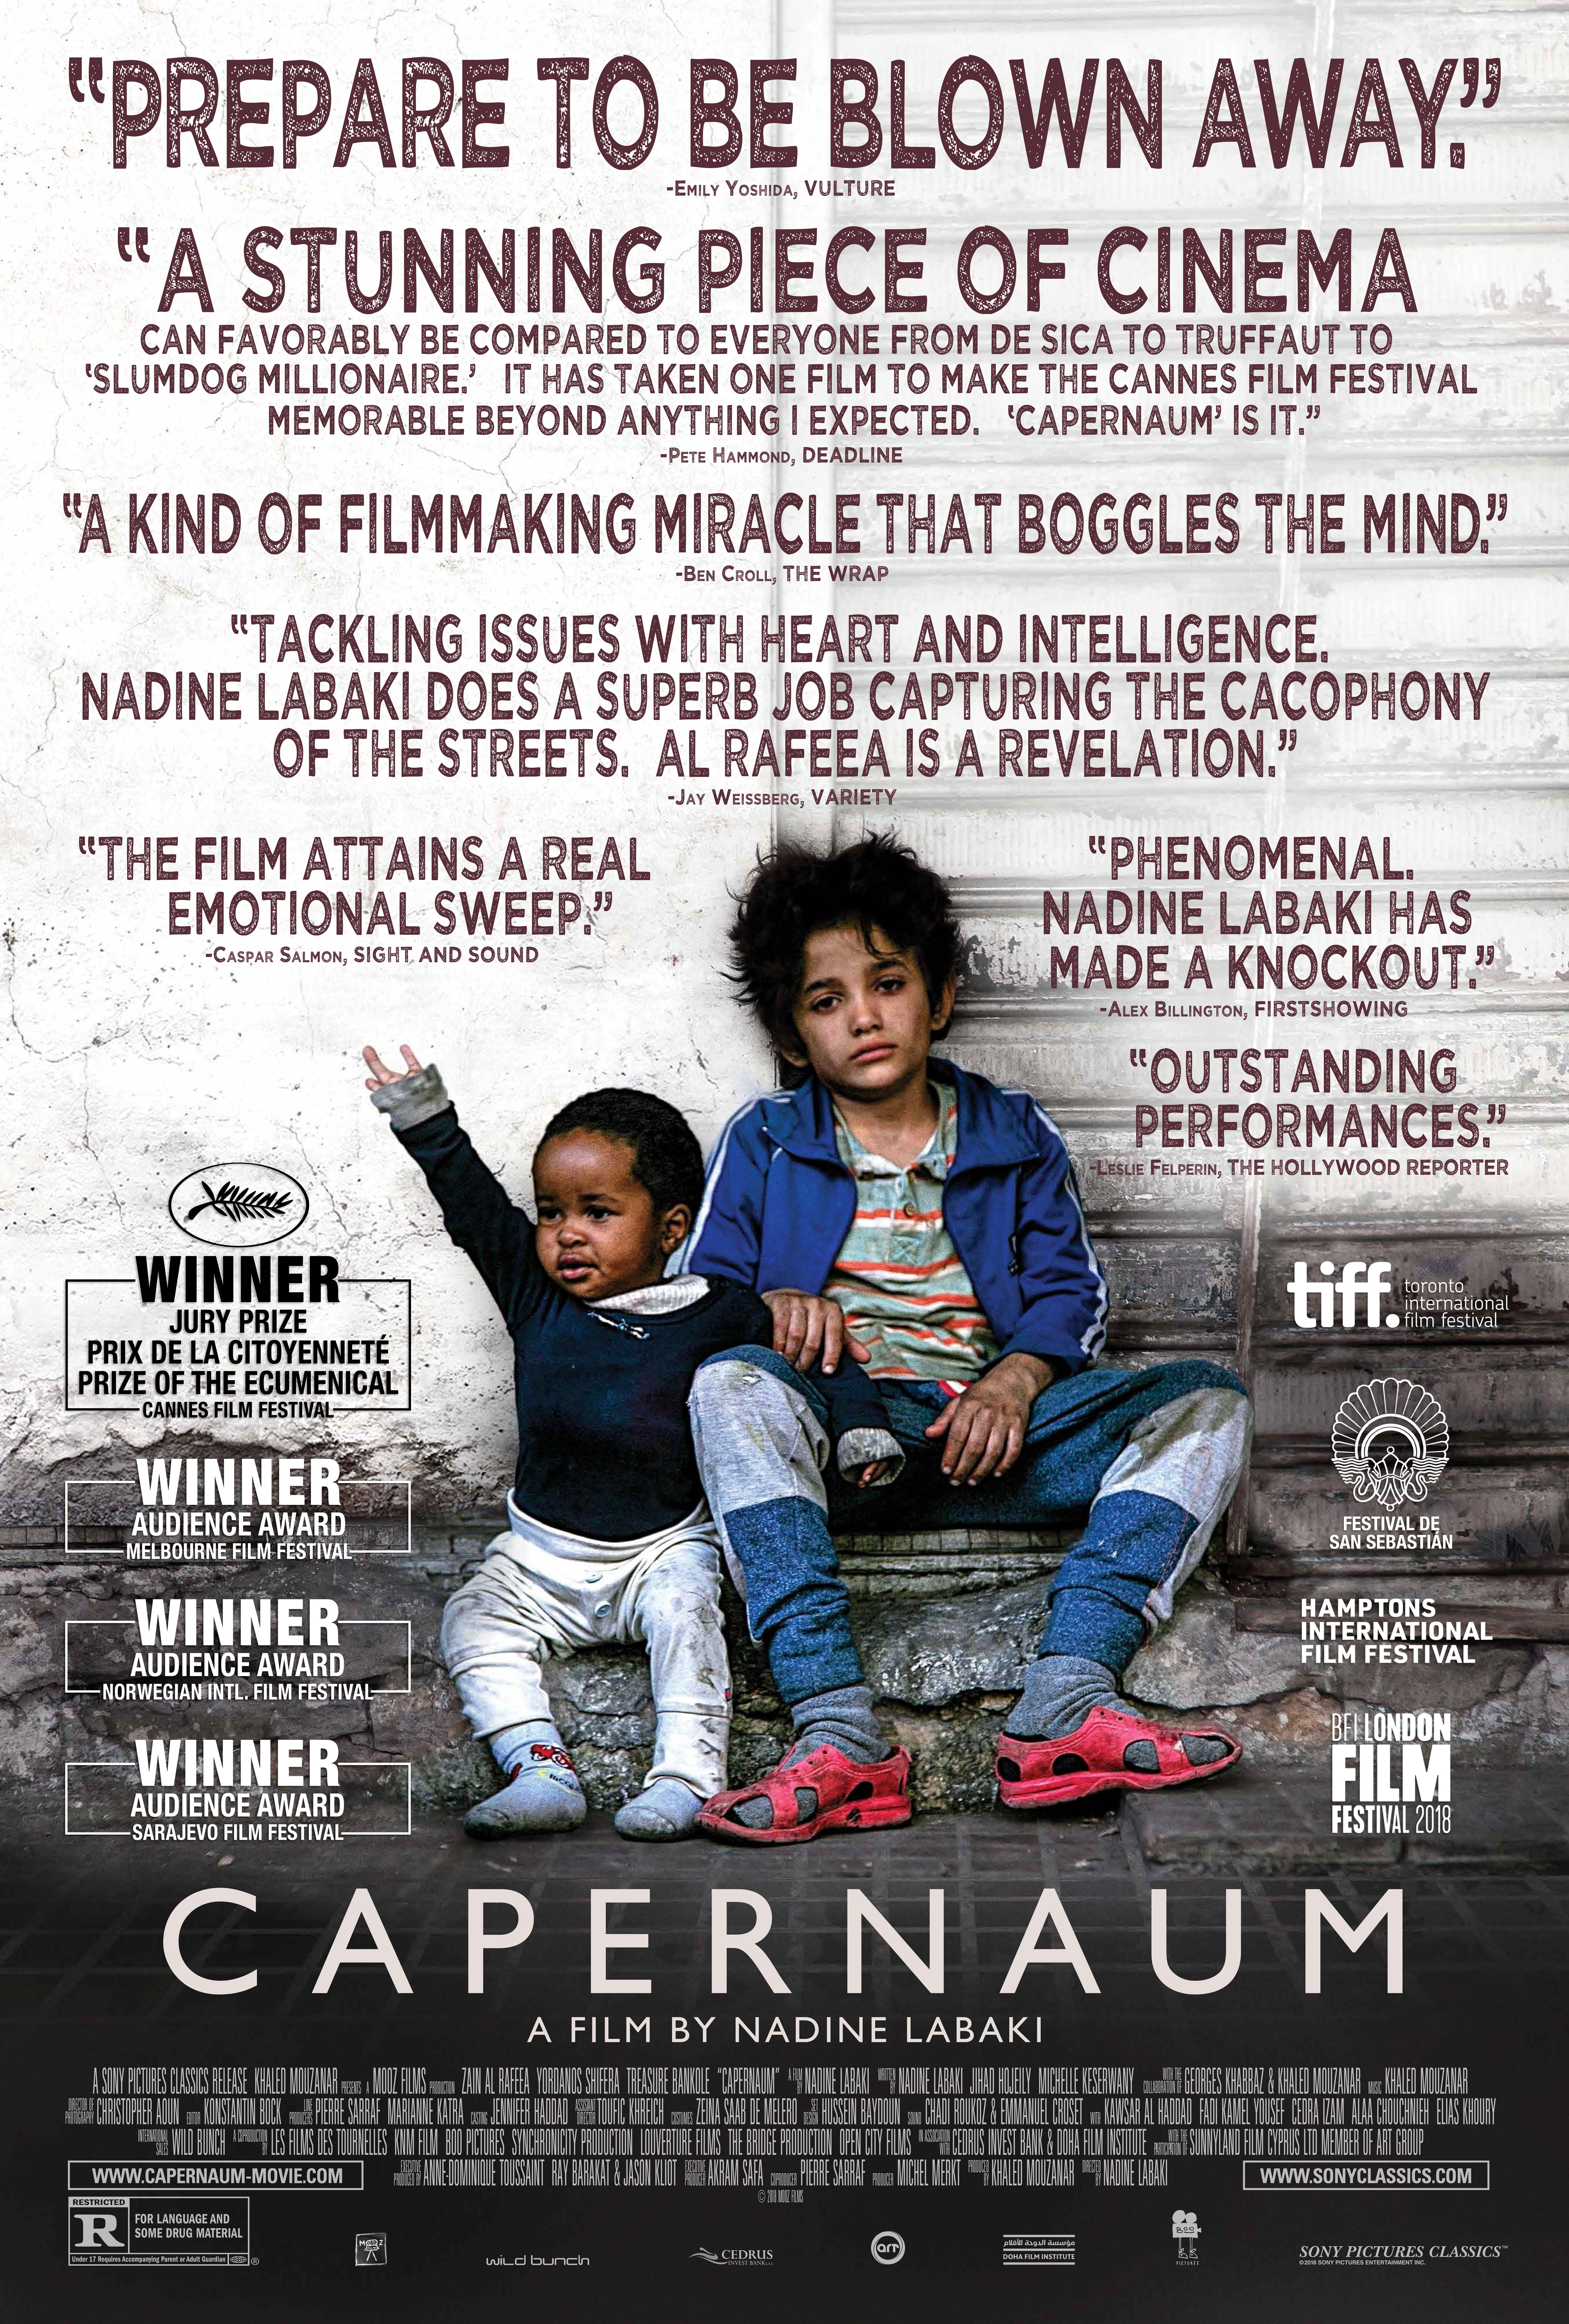 CAPERNAUM poster (Sony Pictures Classics)